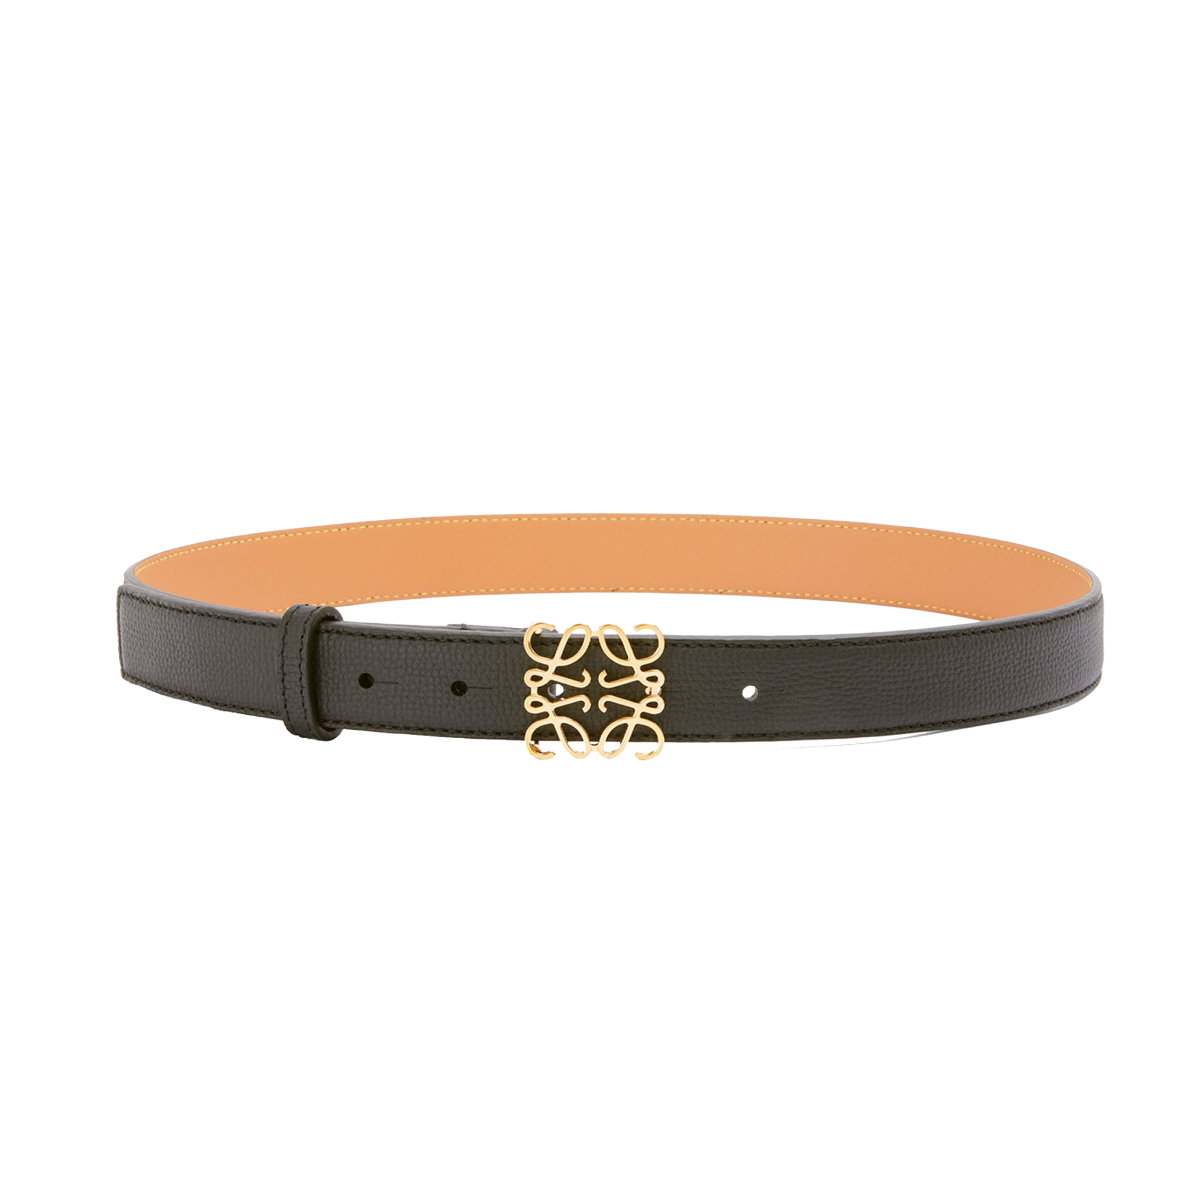 Black leather belt with a gold Loewe anagram logo